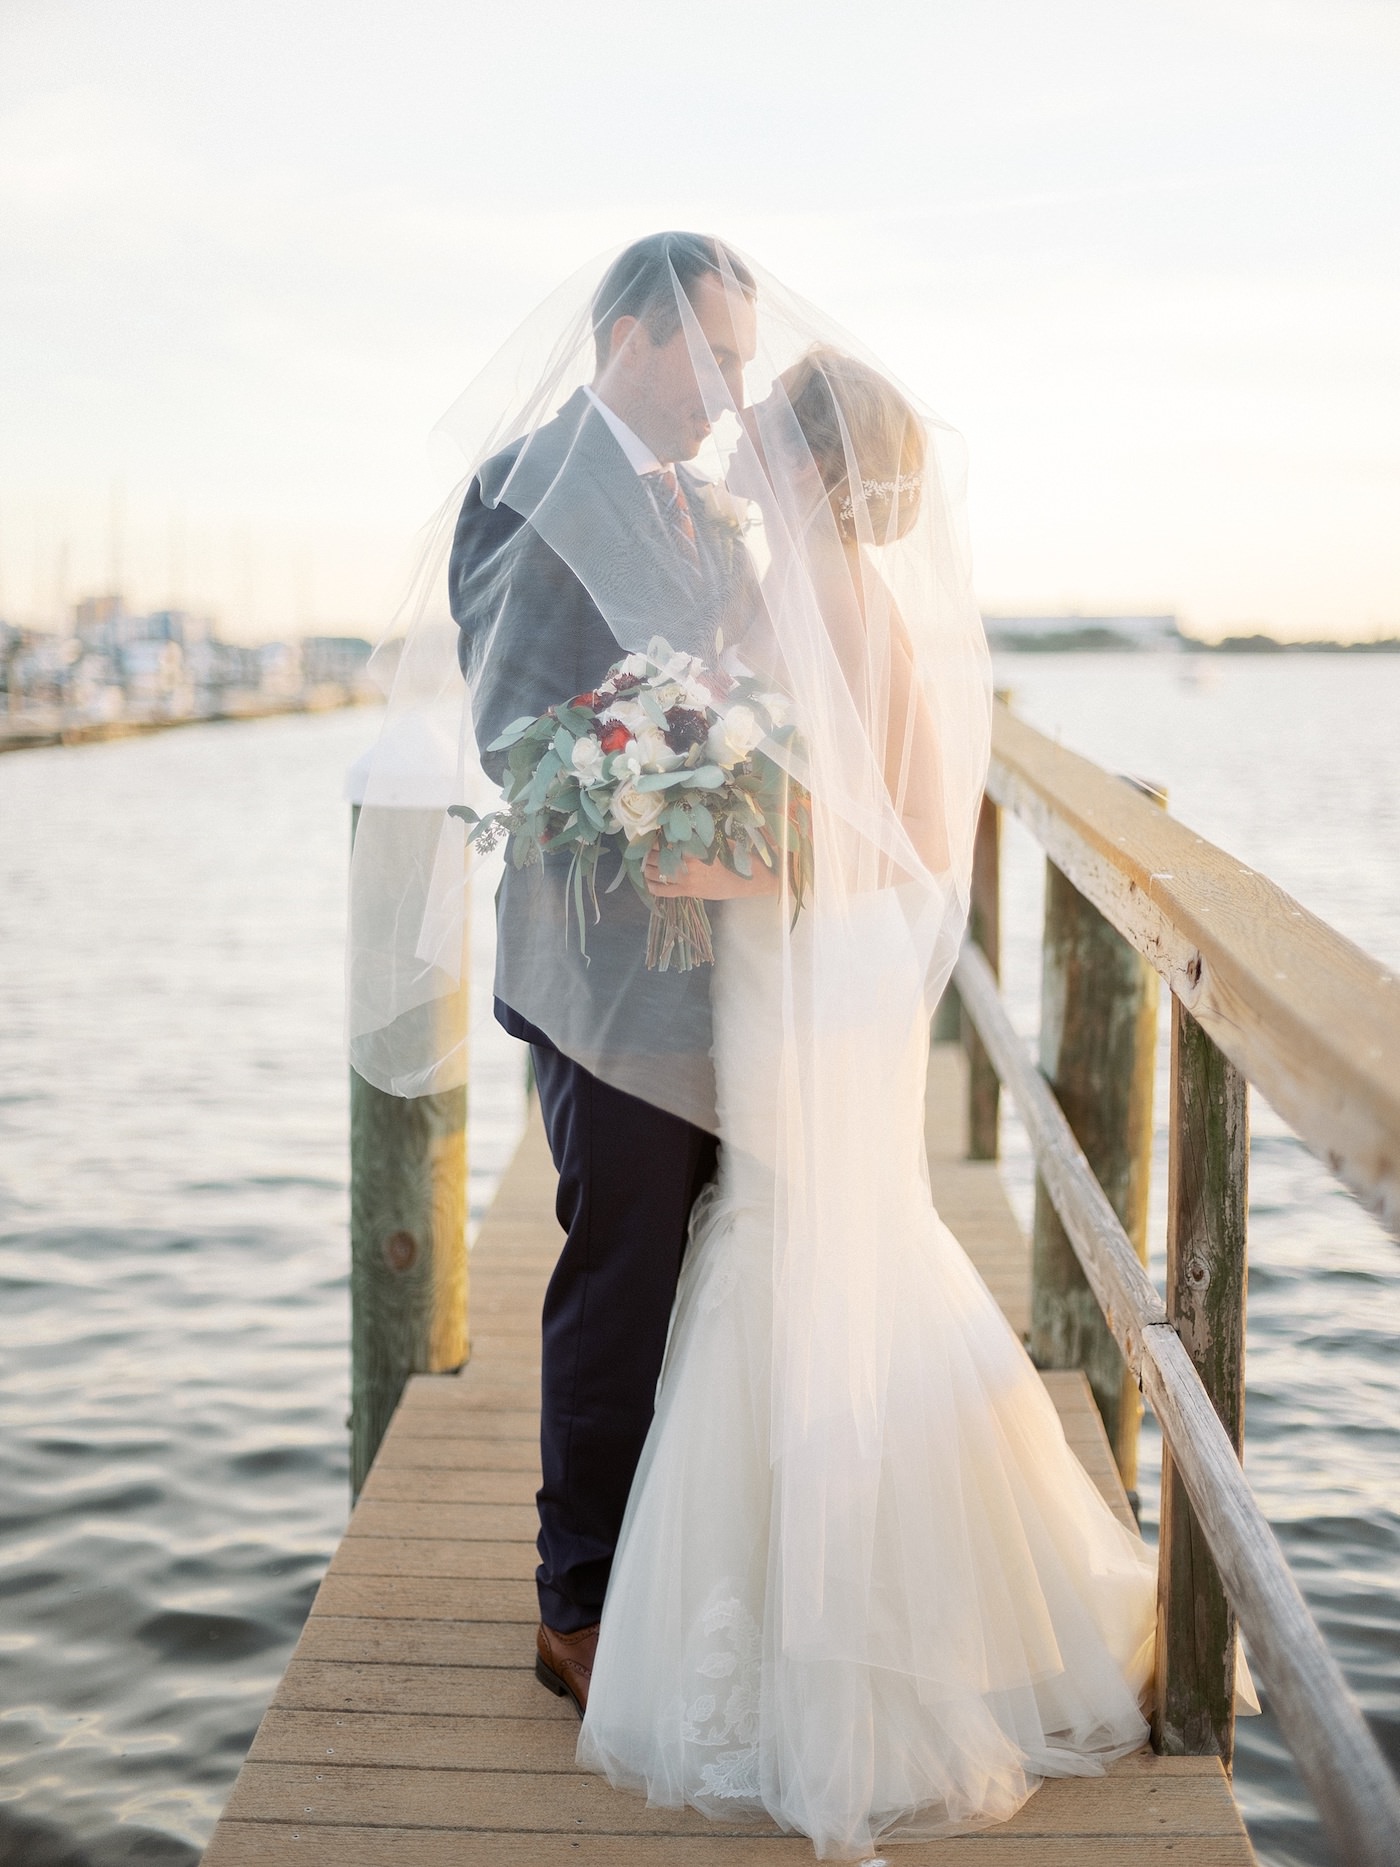 Bride and Groom Outdoor Dock Portrait | Florida Fall Autumn Waterfront Wedding | Bride and Groom Veil Shot